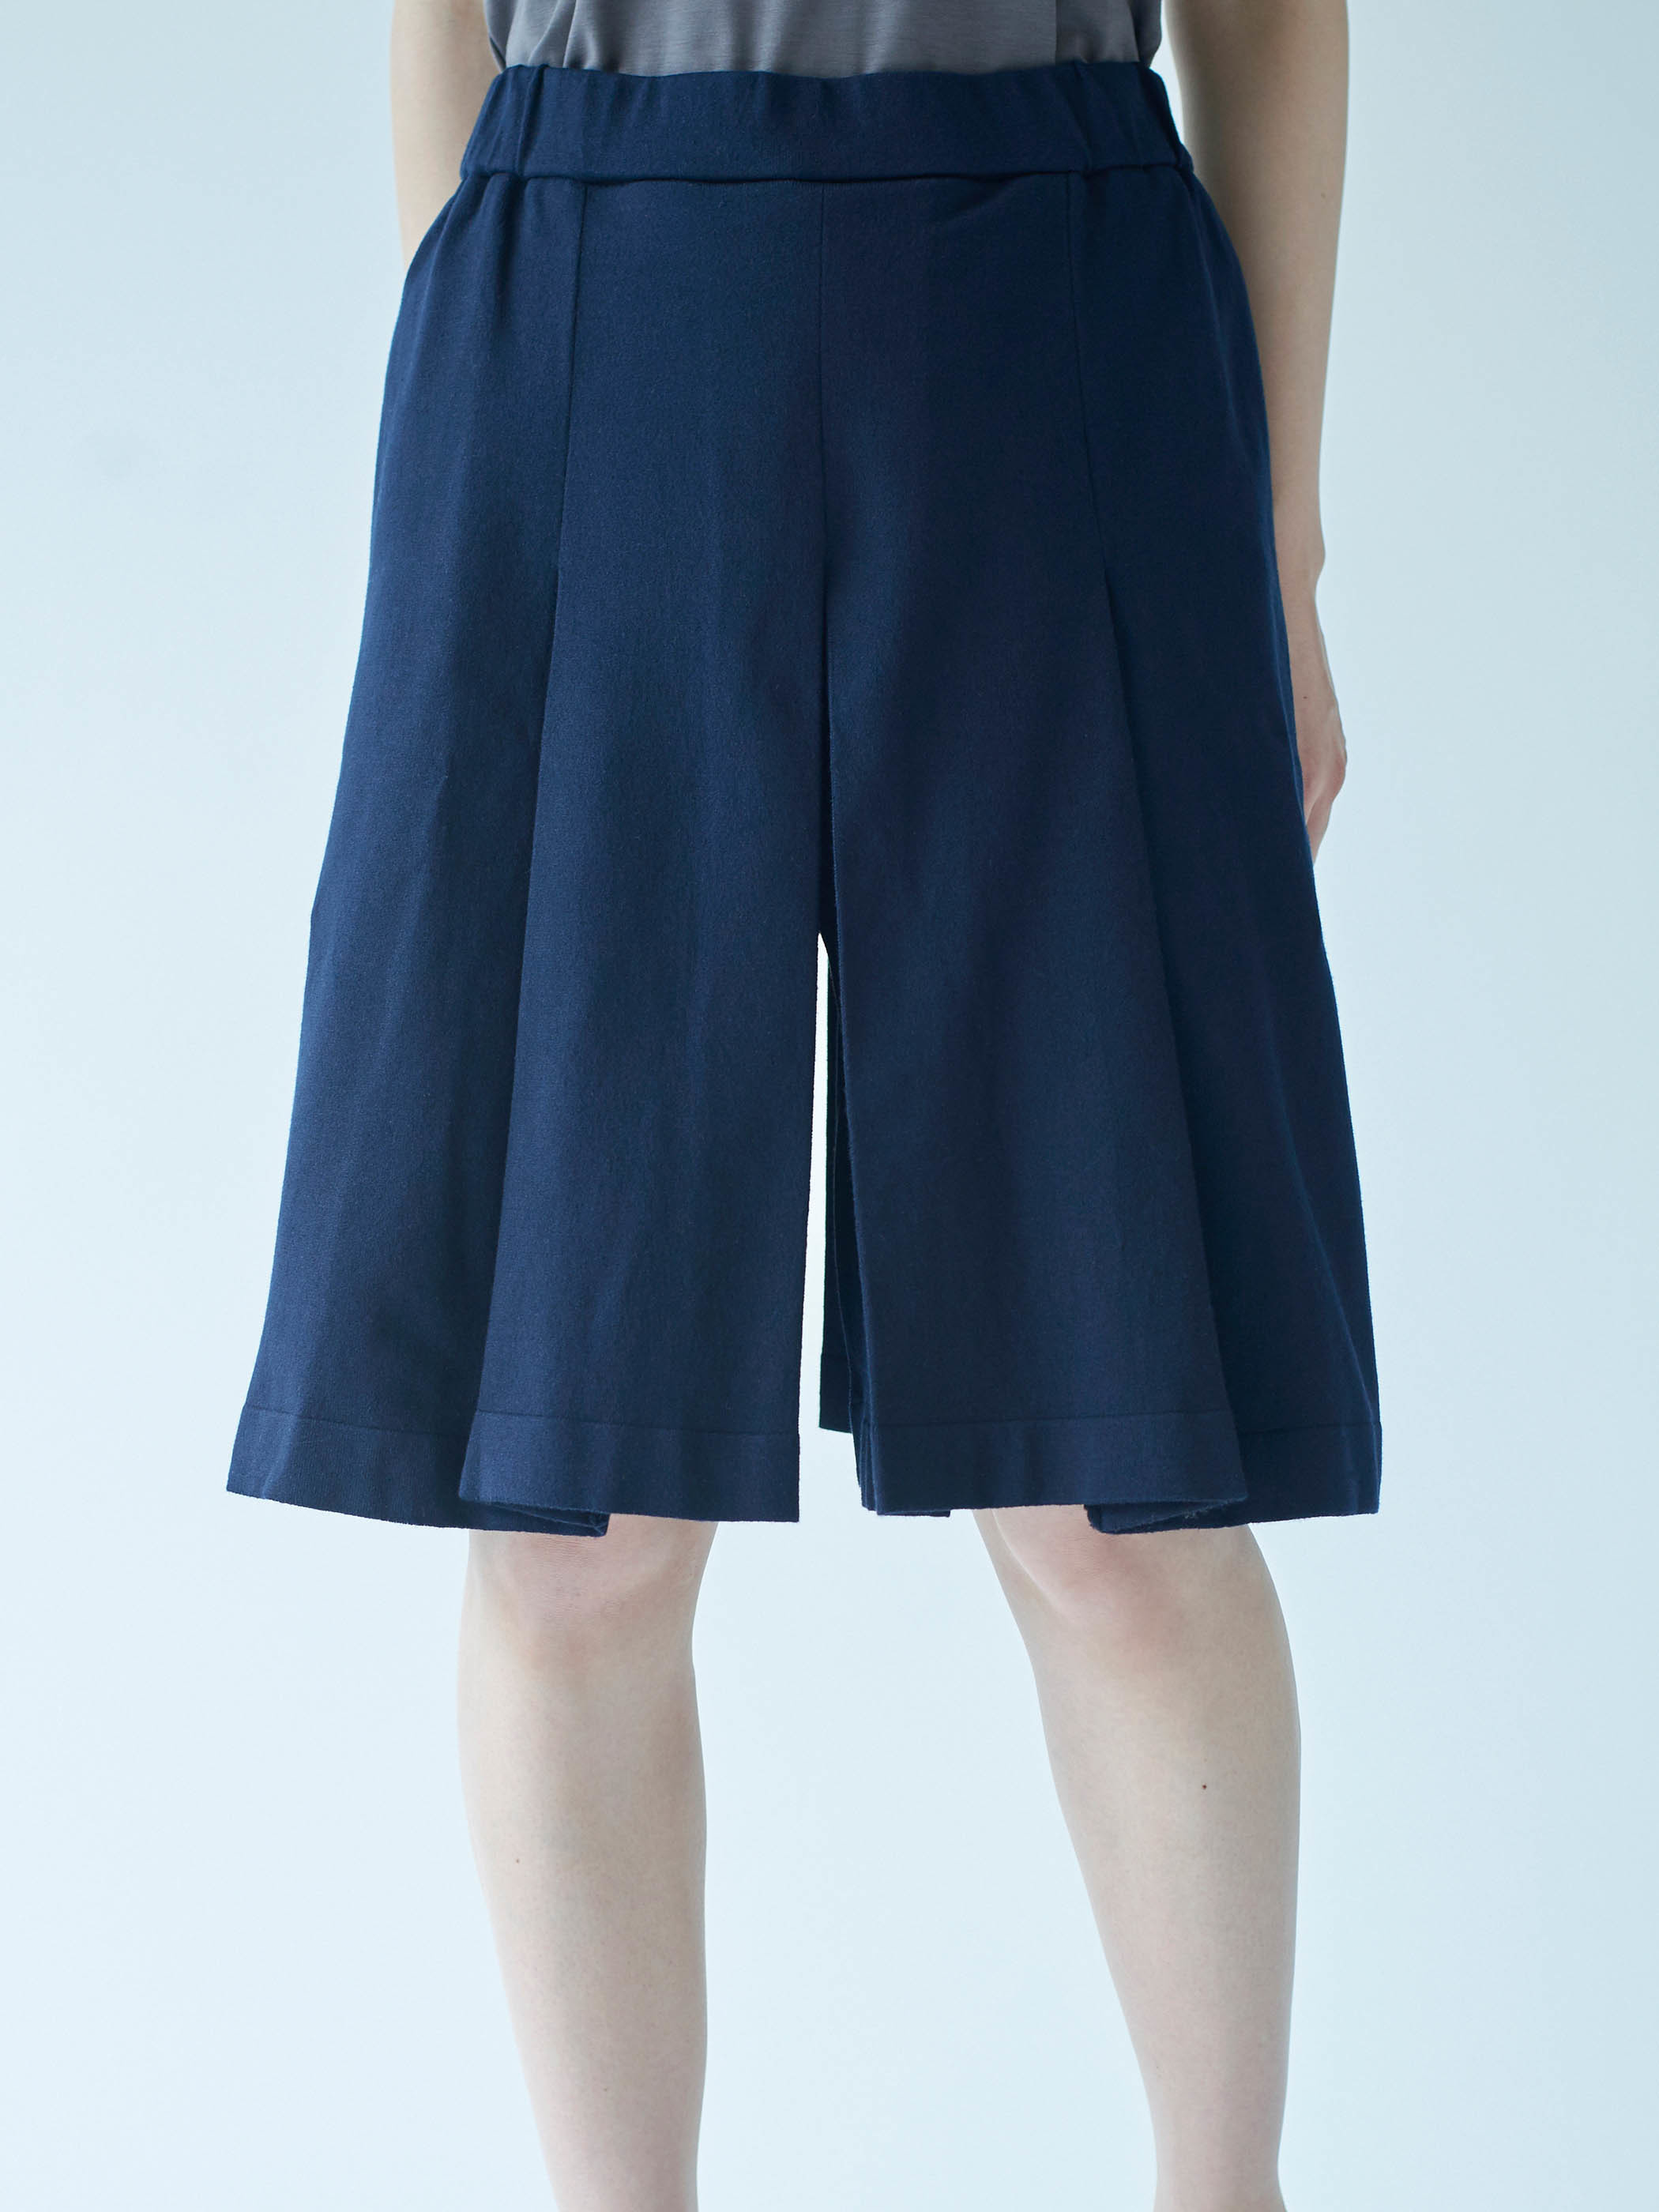 Work Wear collection Women’s Culotte Skirt Navy(キュロットスカート・ネイビー)